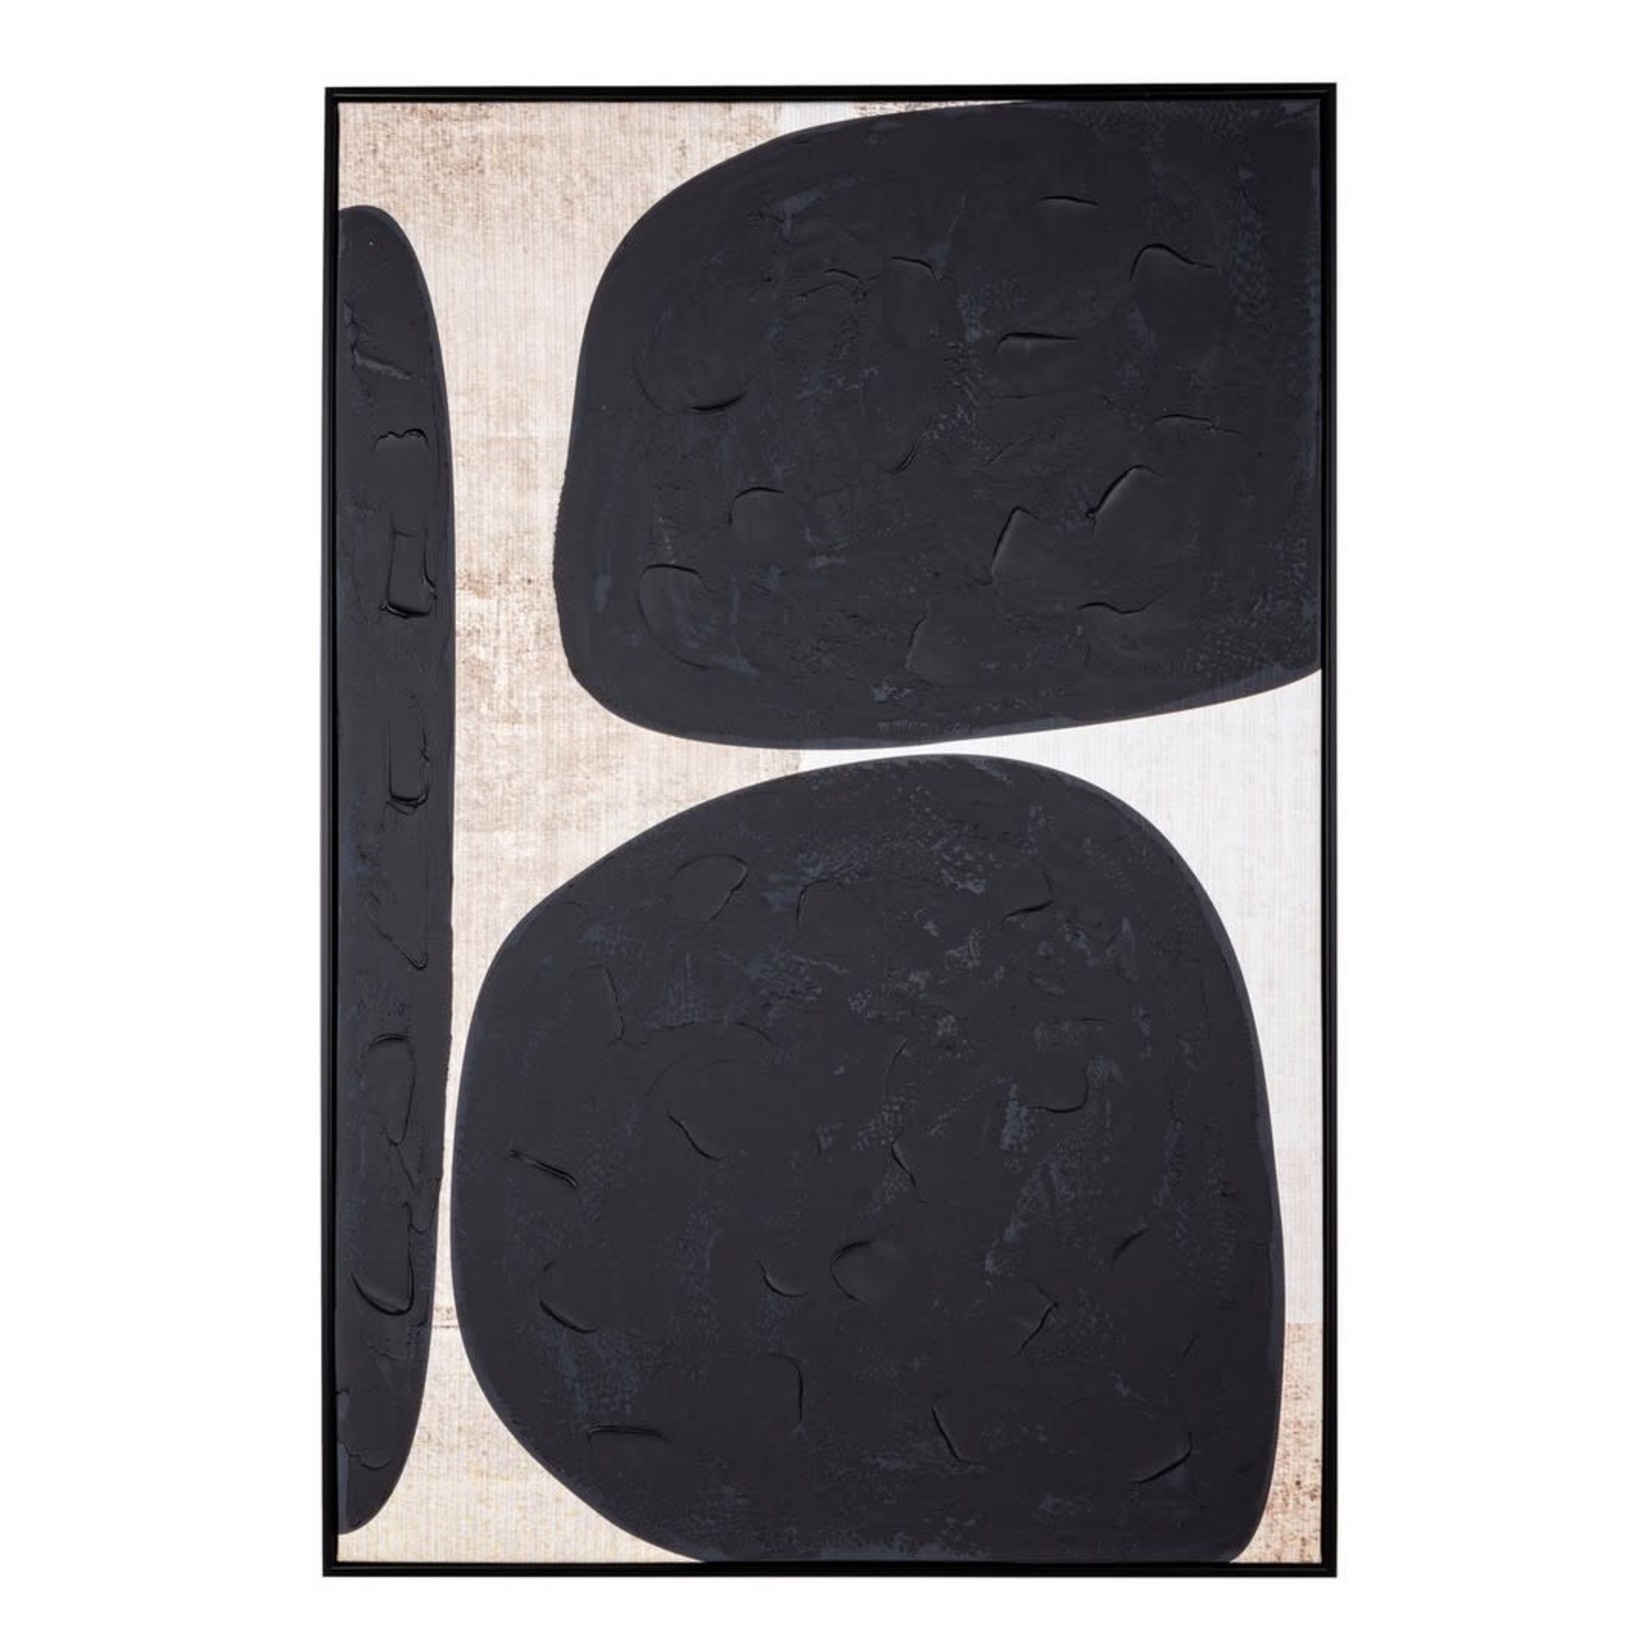 Bild auf Leinwand schwarze Formen 82xH122cm Rahmen schwarz